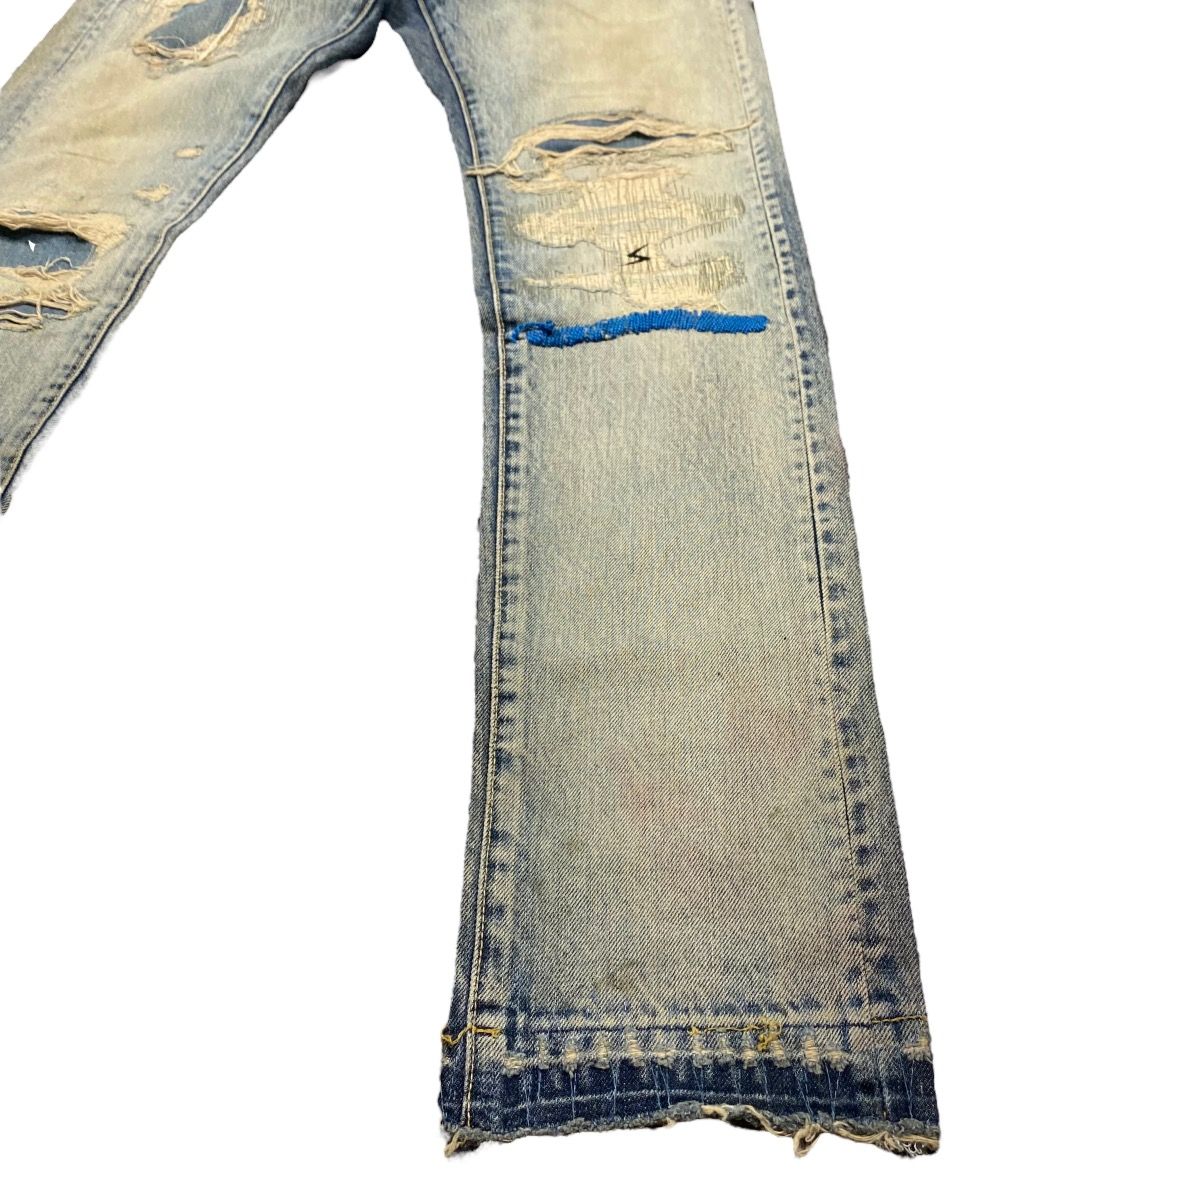 ❗️❗️❗️Rare Item Undercover 68 Blue Yarn Jeans - 5